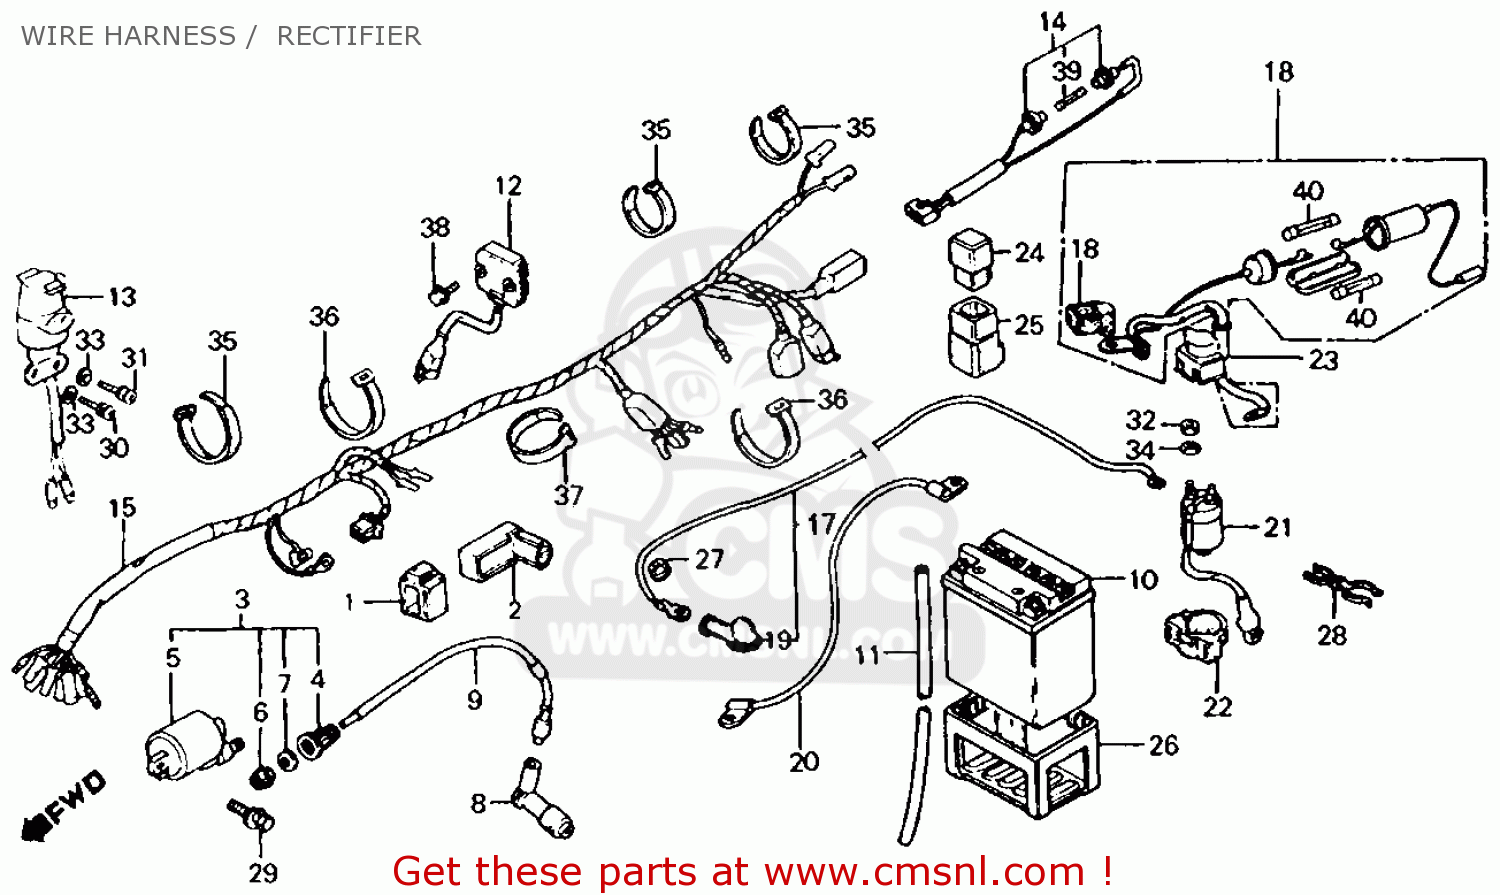 Honda 125m wiring diagram #2